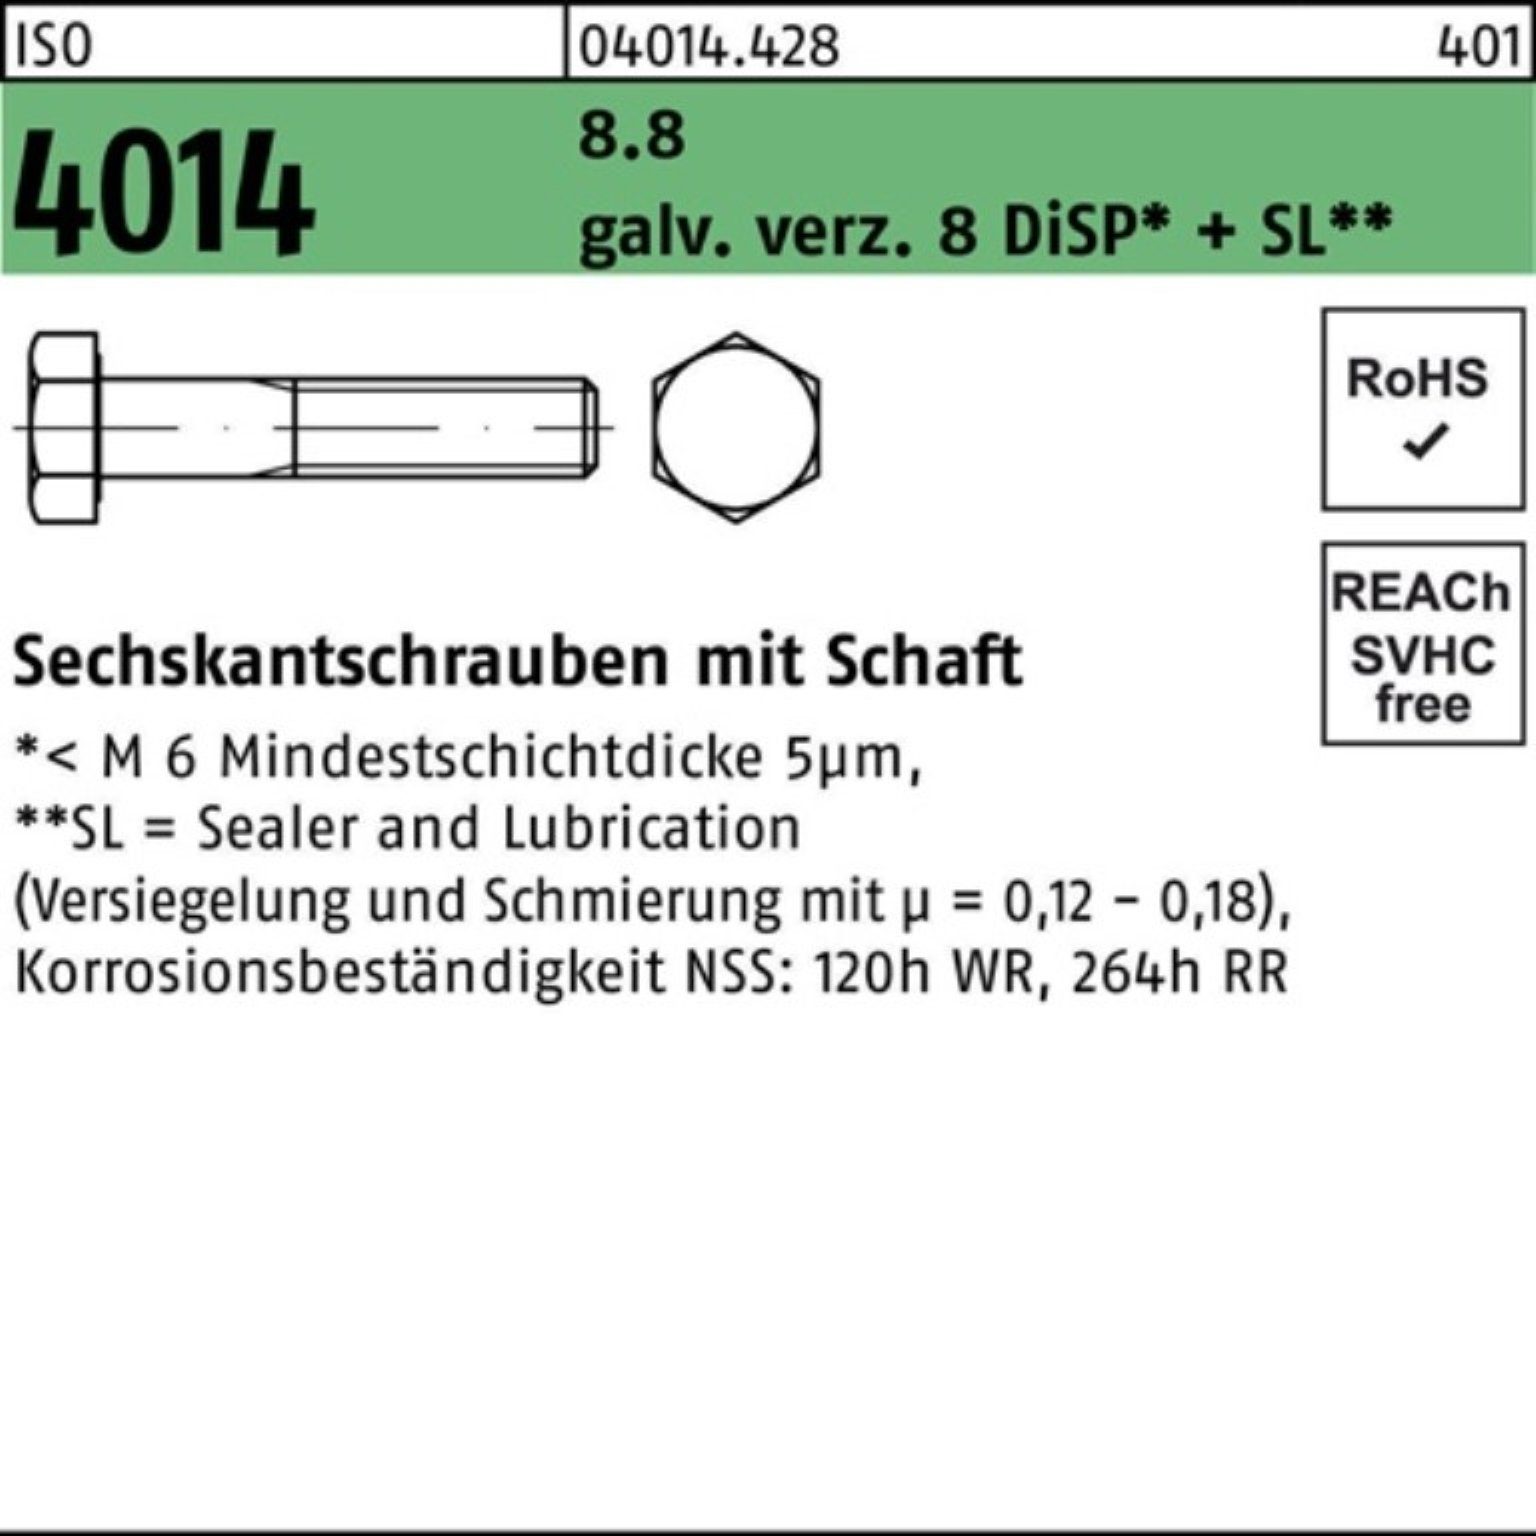 Bufab Sechskantschraube 100er Pack Sechskantschraube ISO 4014 Schaft M12x200 8.8 galv.verz. 8 | Schrauben